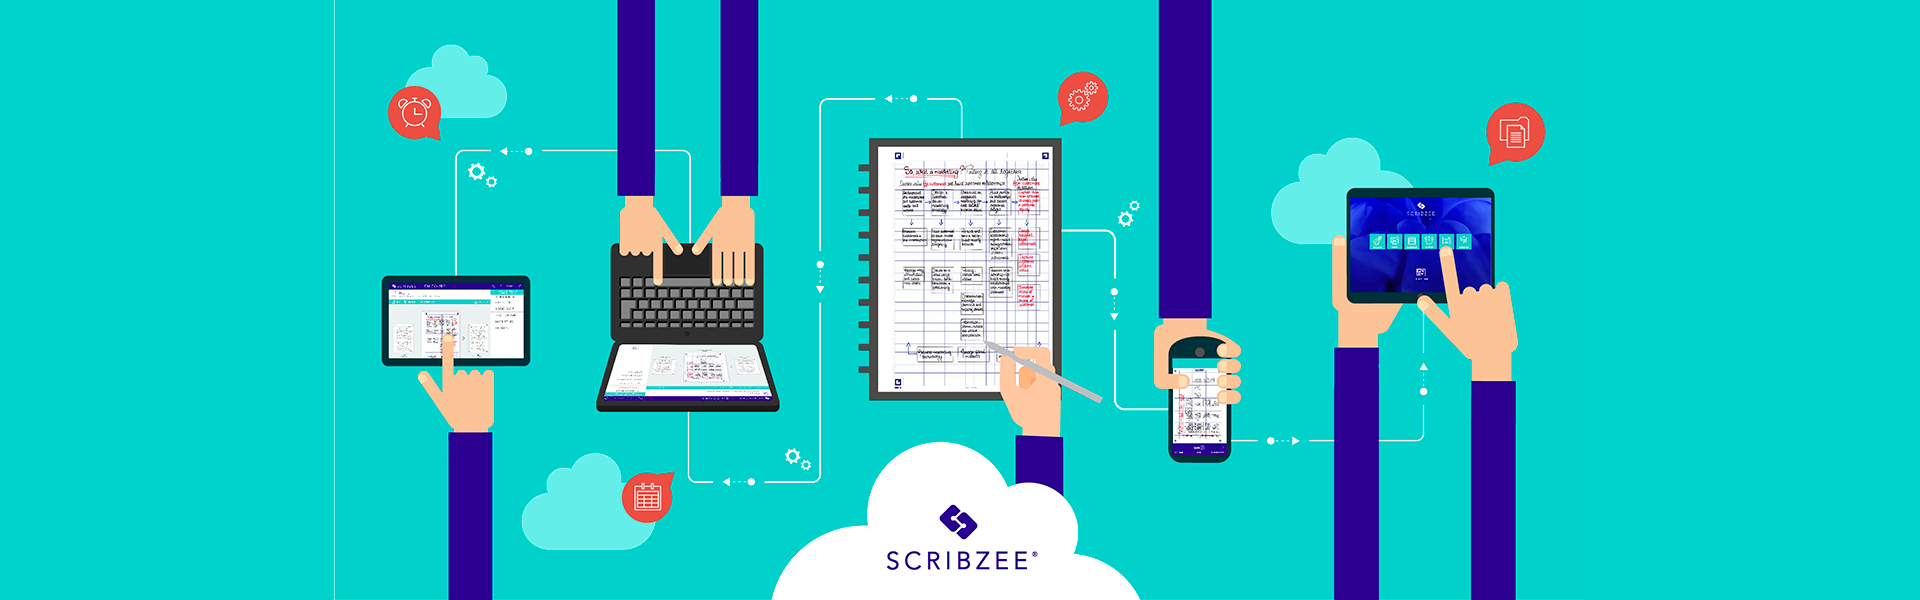 SCRIBZEE_App_Handwritten_notes_management_scan_save_access_share